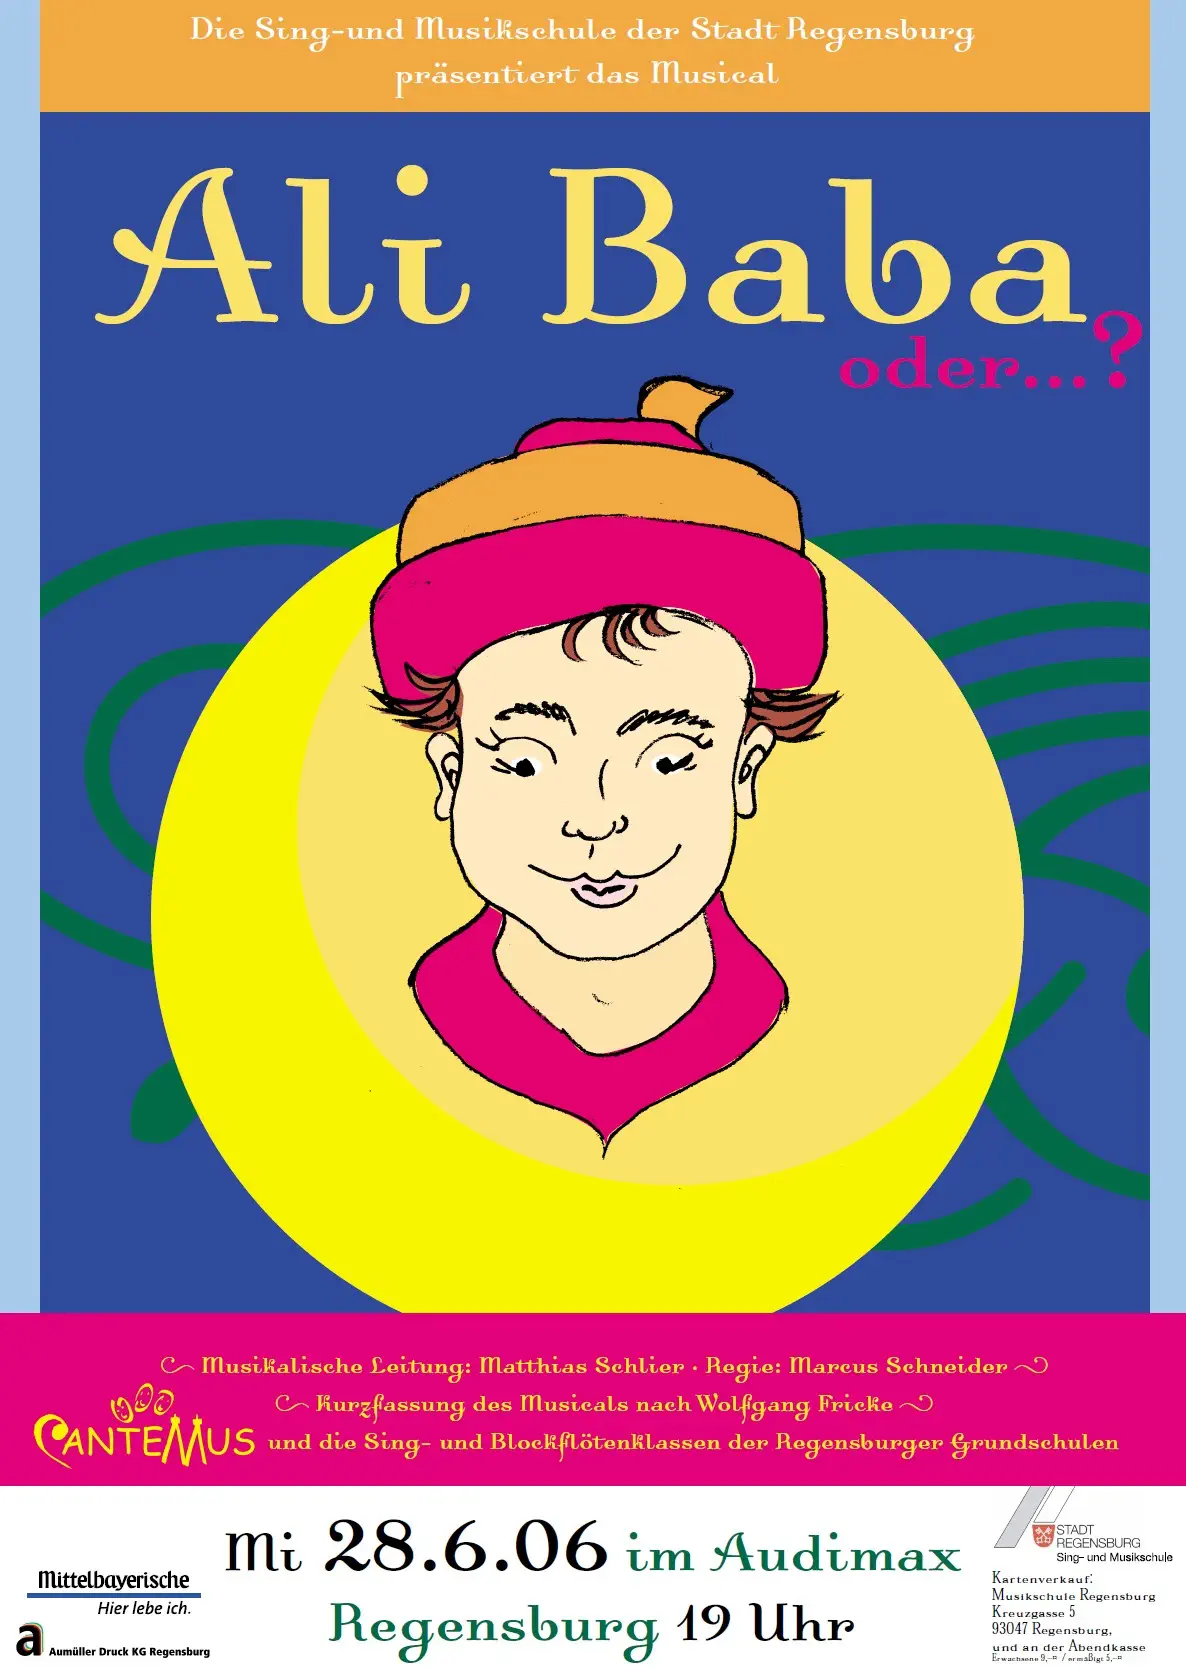 Ali Baba, oder ...? (2006)